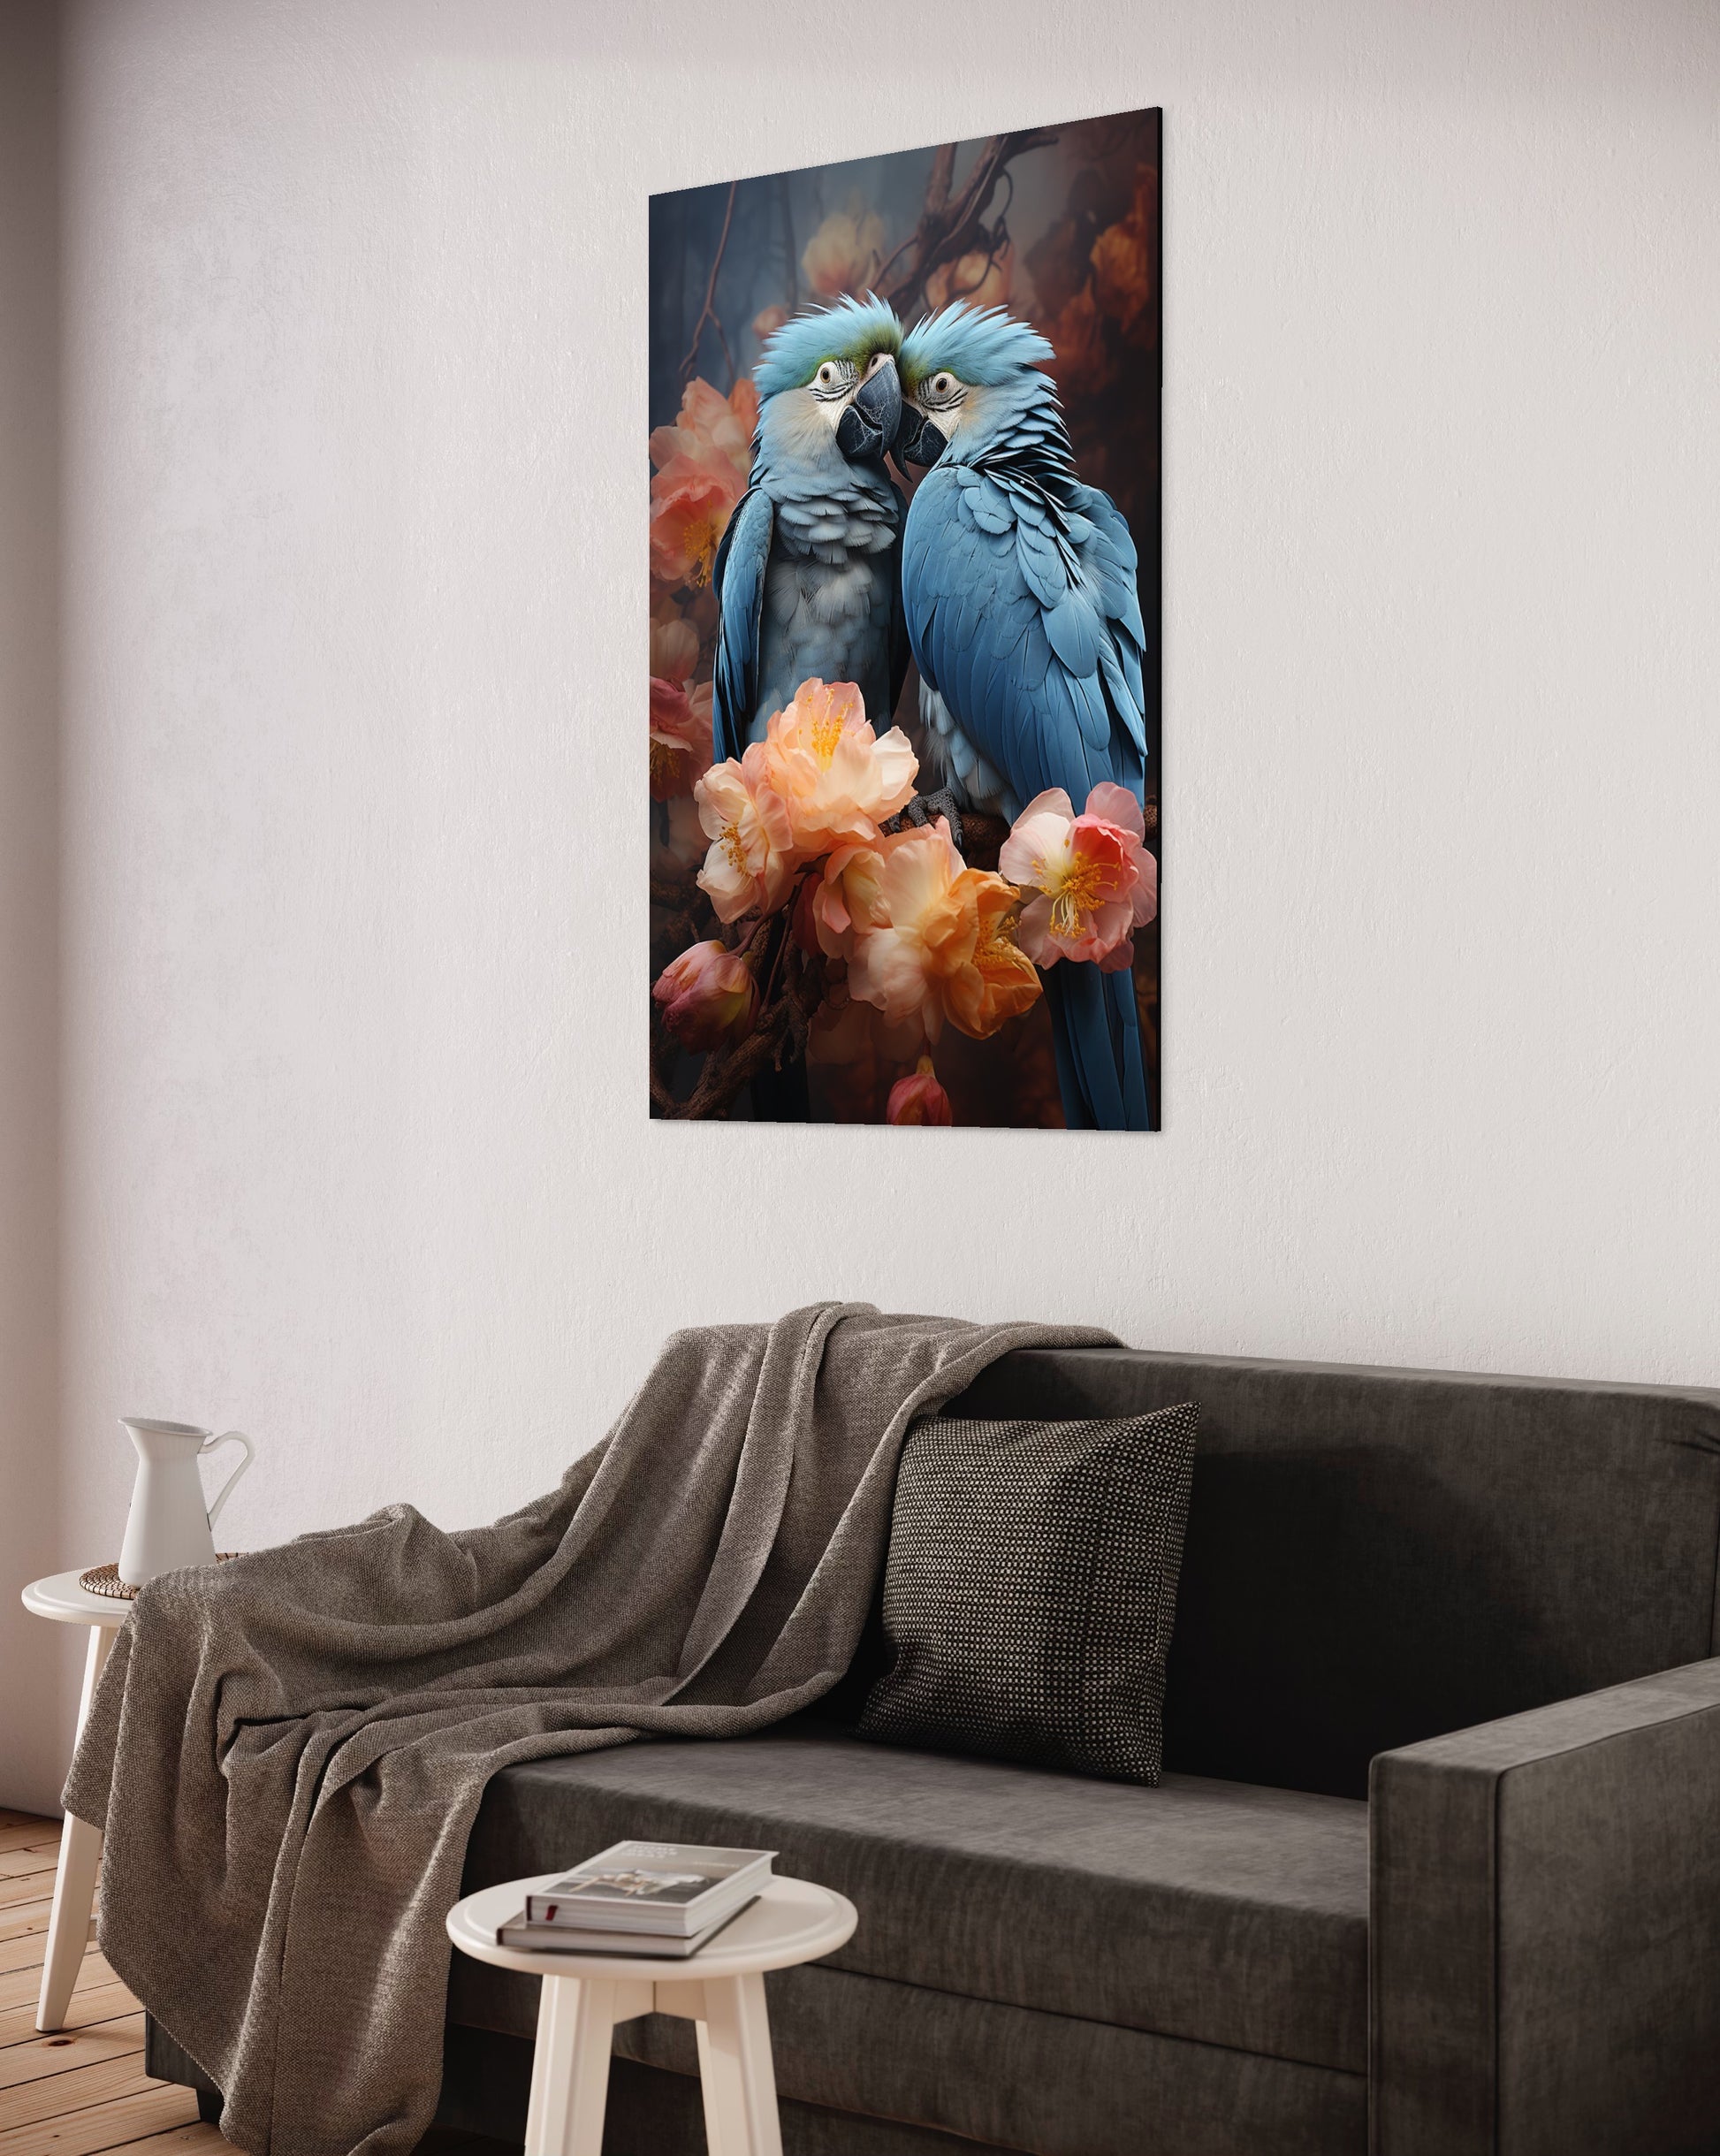 blue macaws-[Aluminium]-[Canvas]-[Poster]-[plexiglas]-luxeprintz